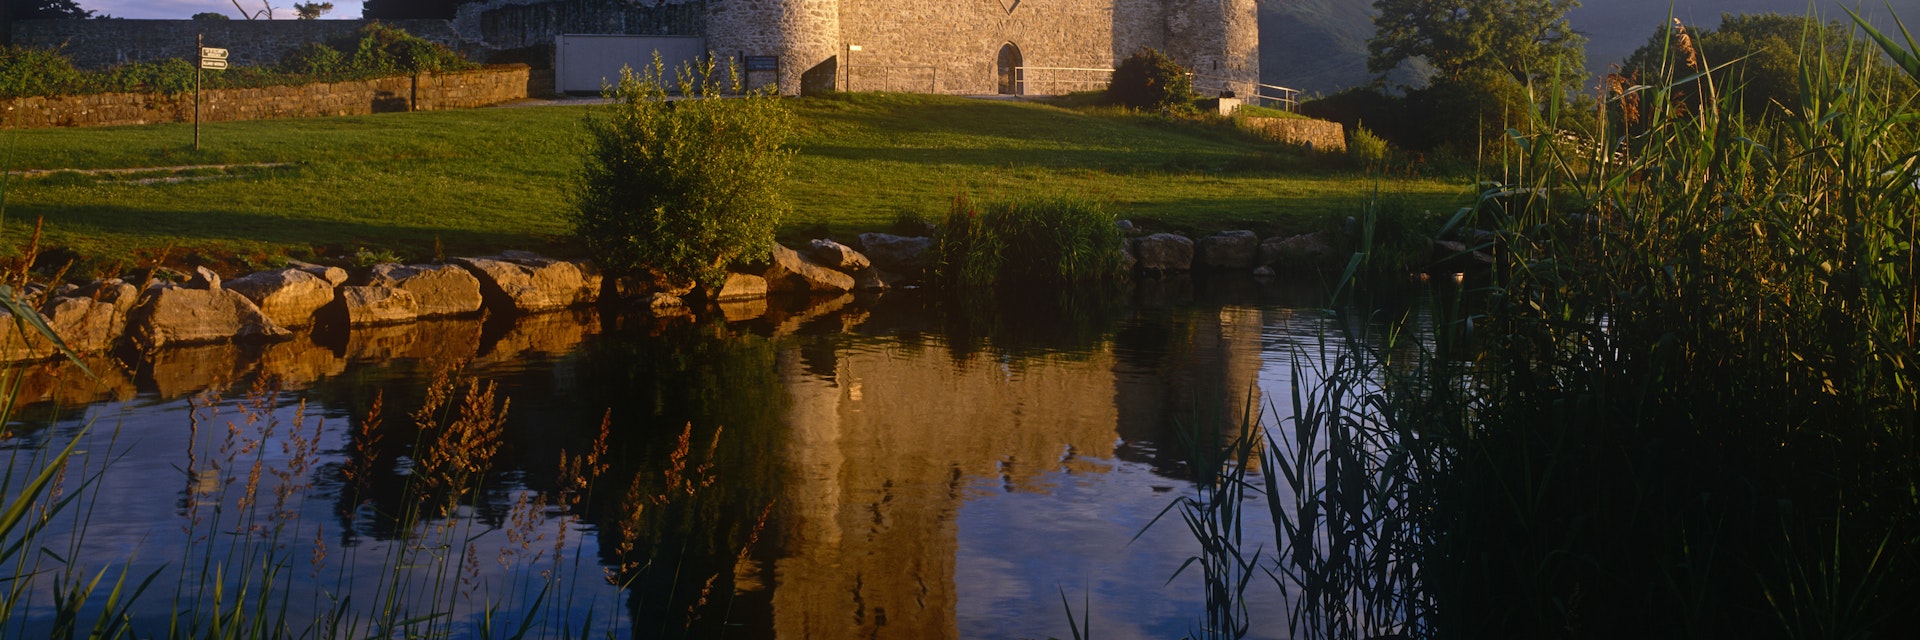 Ross Castle, Killarney,